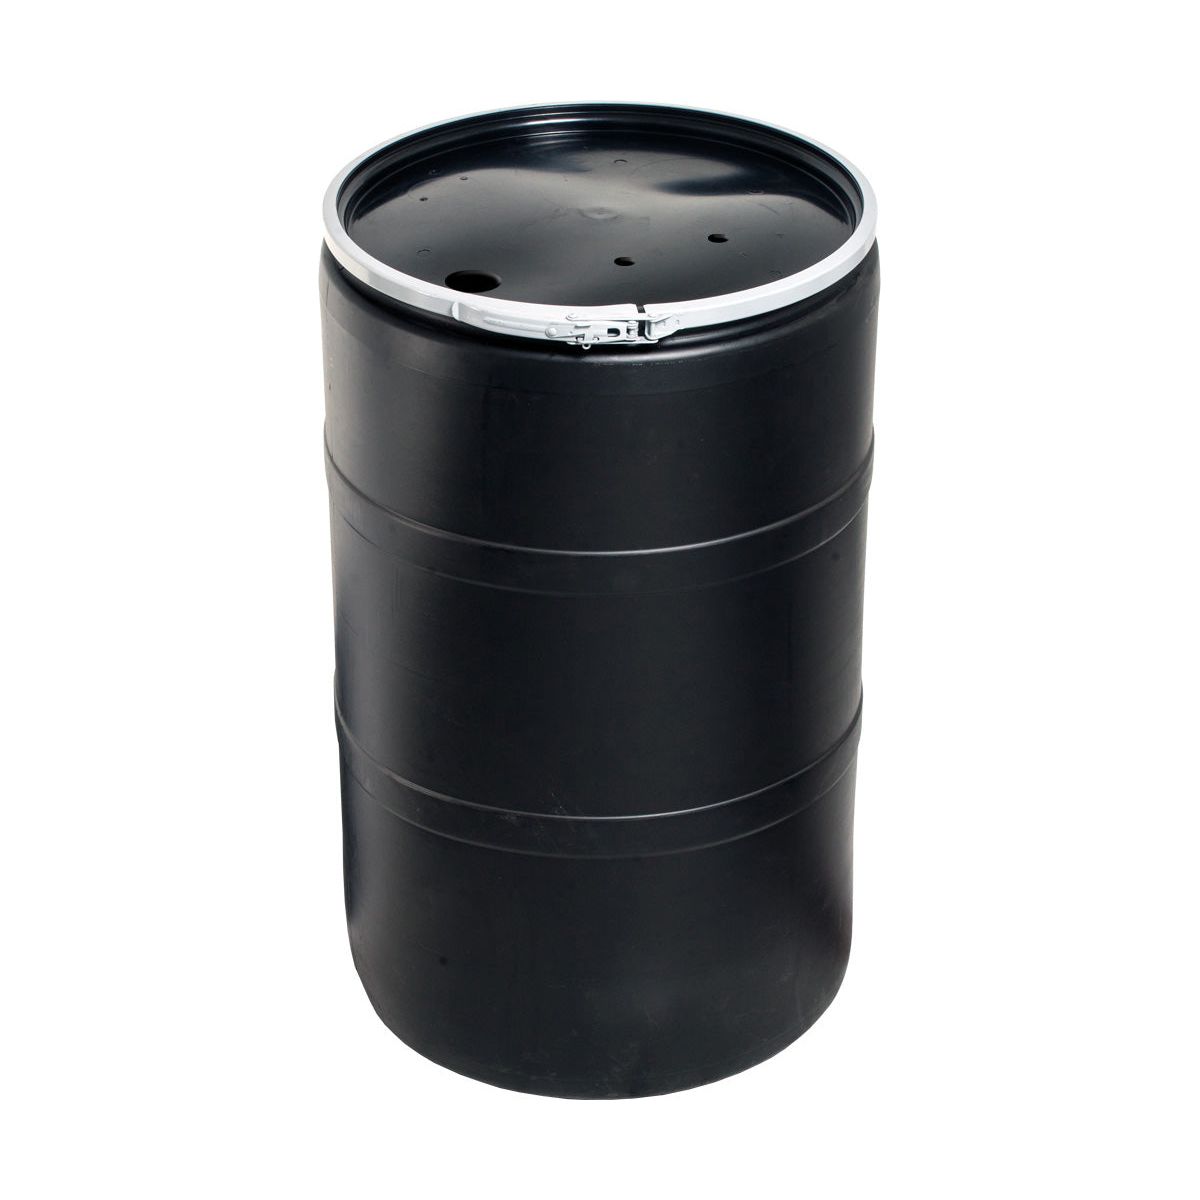 ActiveAqua Pre-drilled 55-gallon Drum with LockingLid